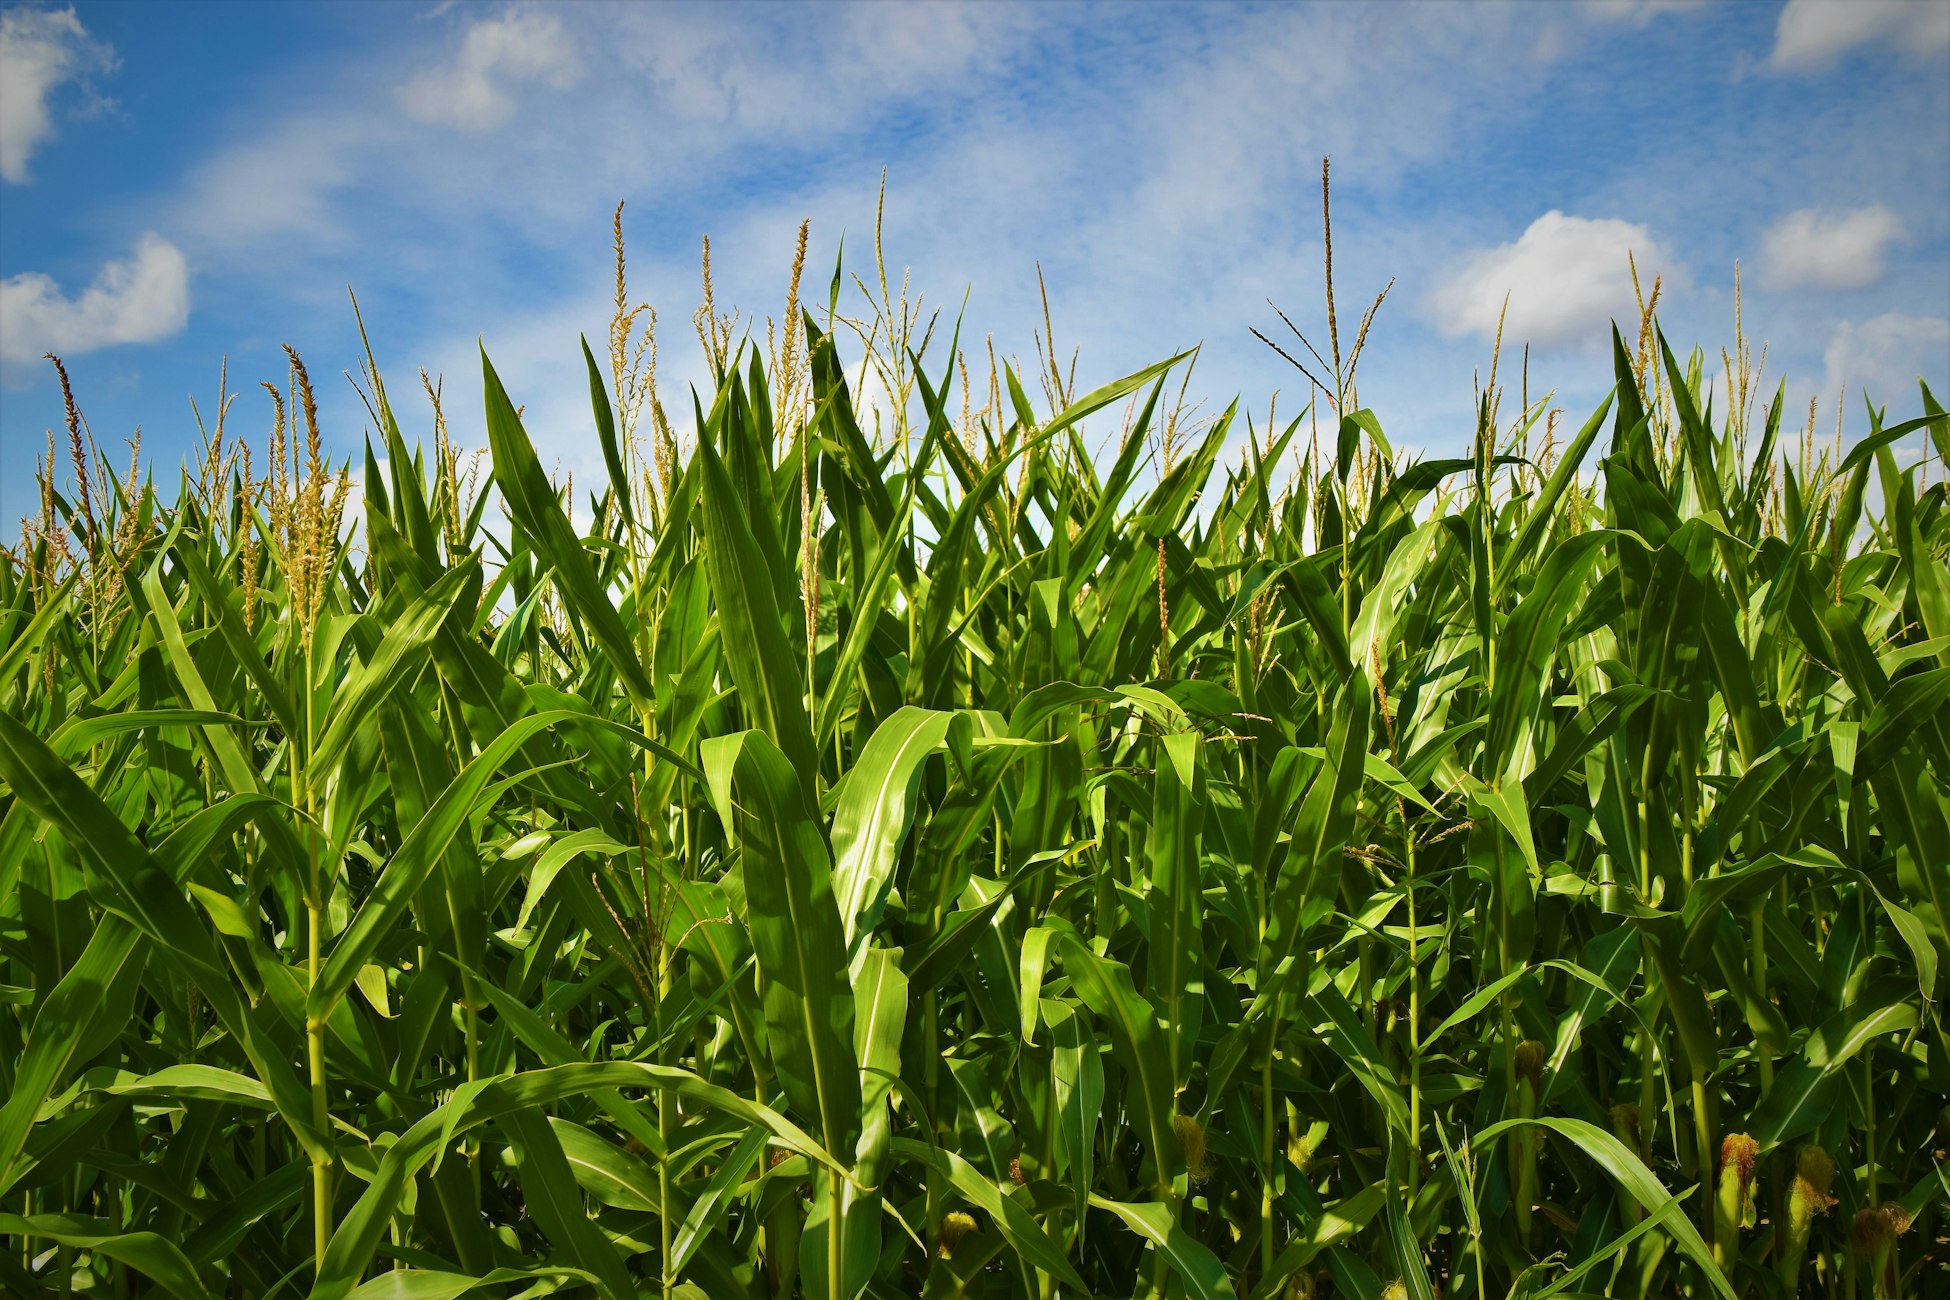 Good News for Wildlife and Habitat: Non-GMO Corn Hybrids Smash GMO Varieties in Illinois Trials